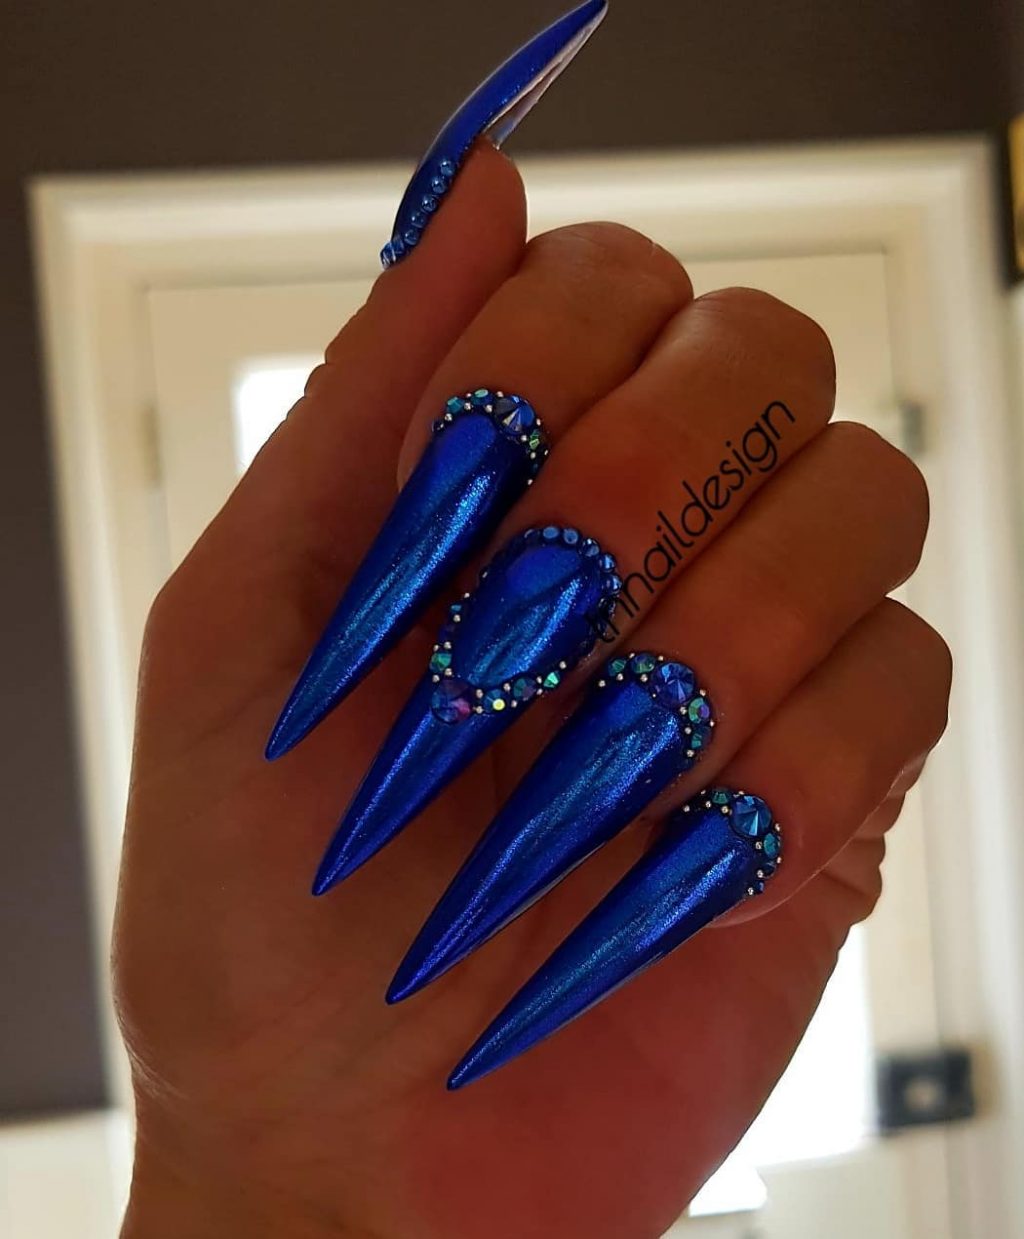 Beautiful Dark Blue Stiletto Fall Nails with rhinestones